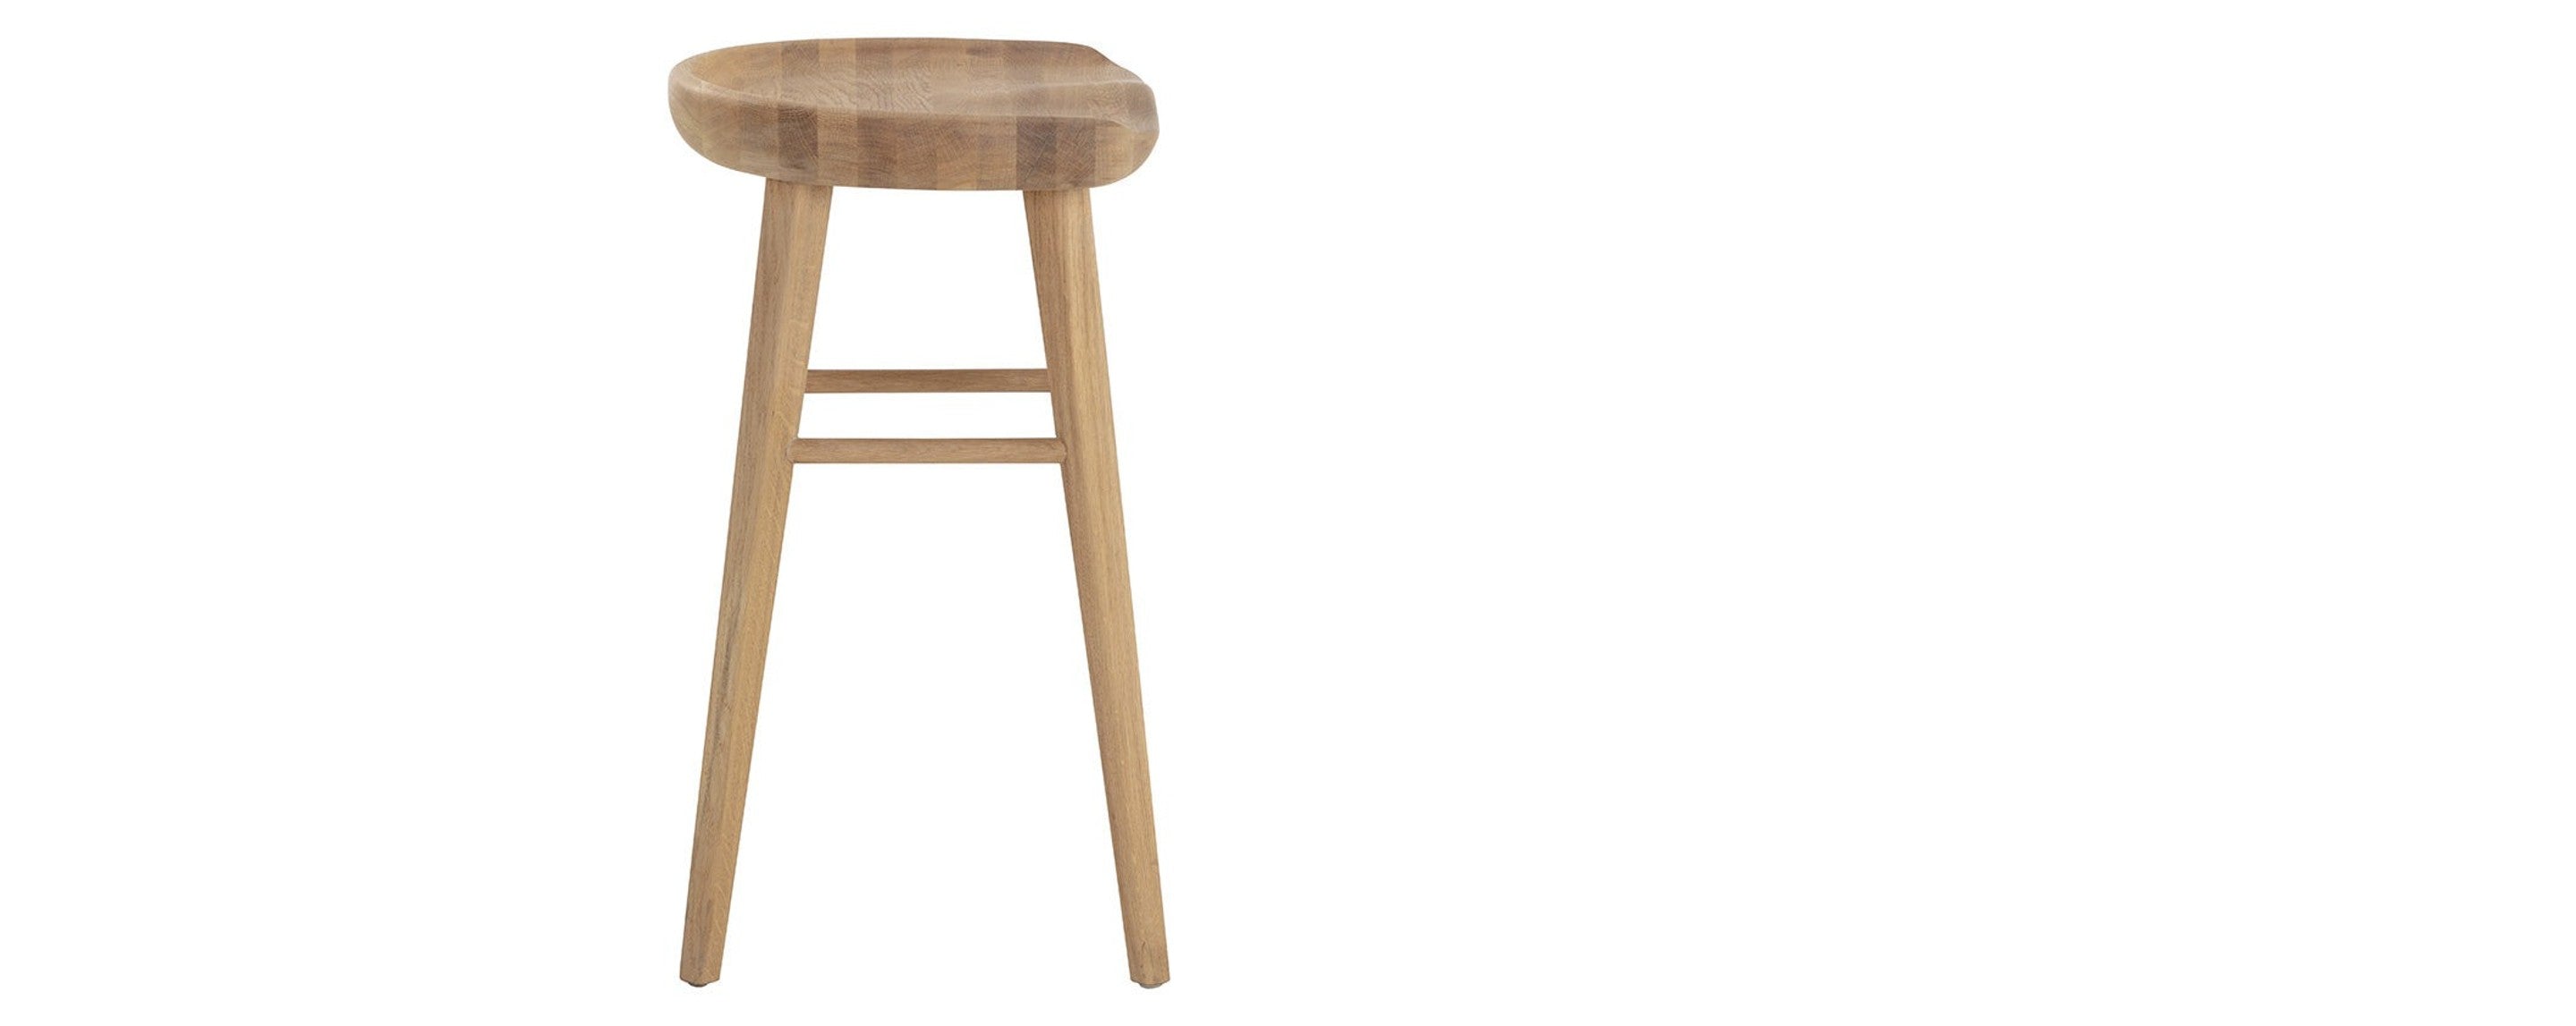 the oak natural counter stool